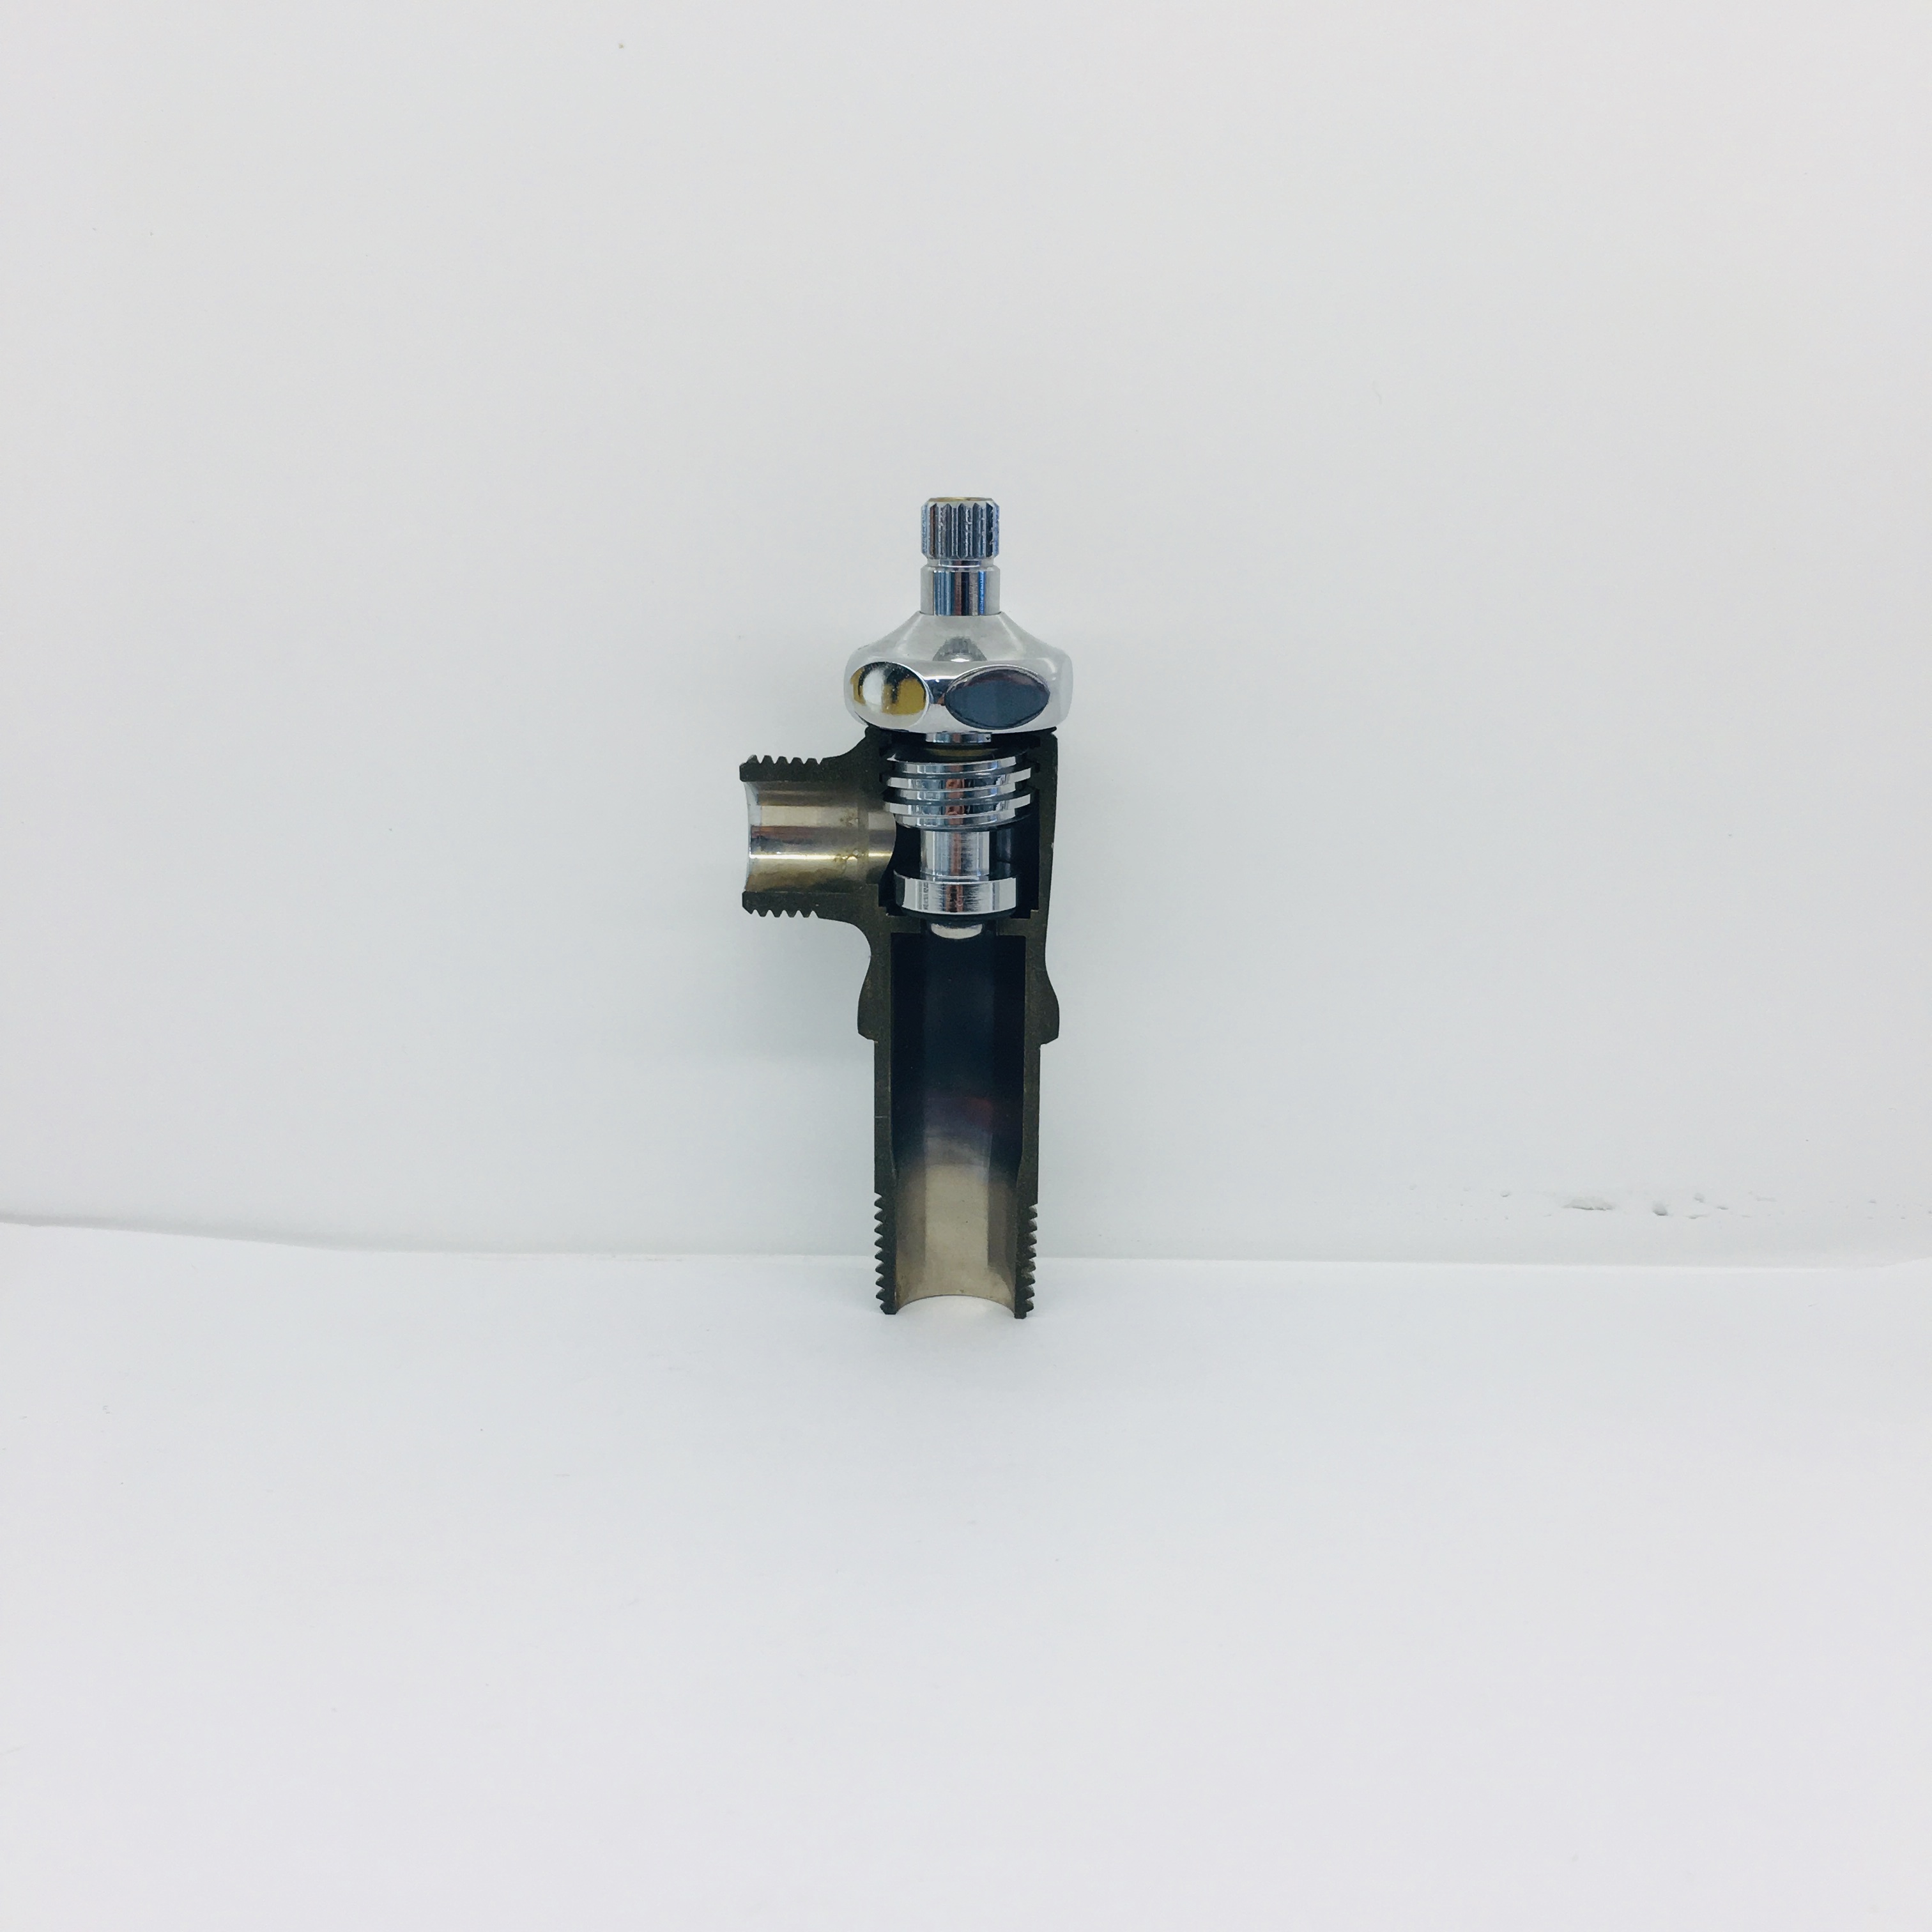 Buy Best Brass Angle Valve For Intelligent Toilet Factory –  Brass angle valve slow open brass triangle valve brass back-flow angle valve Toilet angle stop valve Water Valves – Fengcai